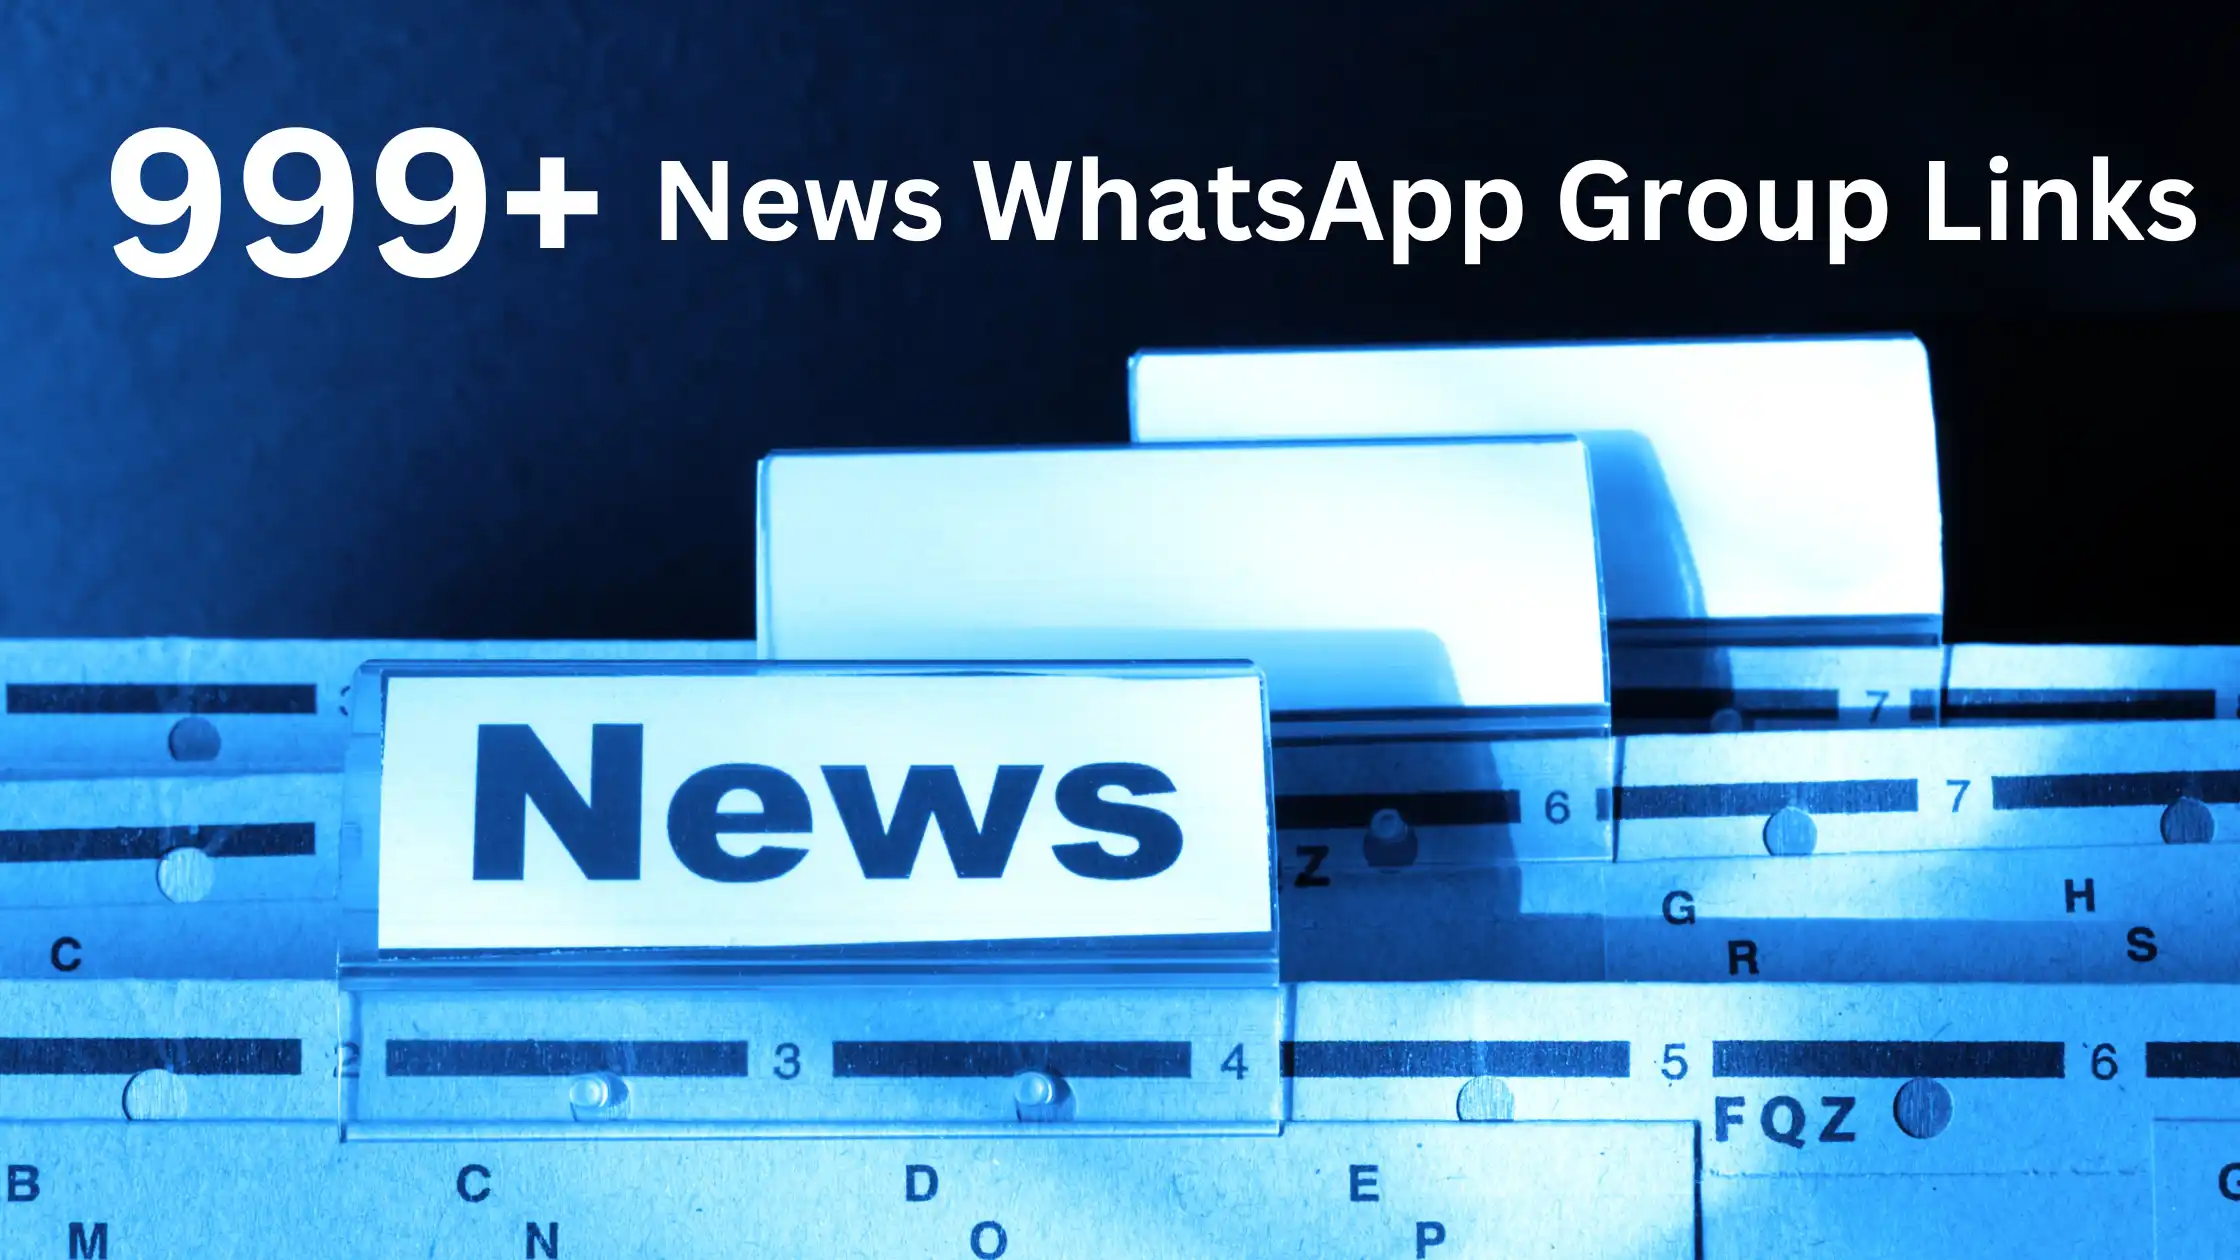 999+ News WhatsApp Group Links